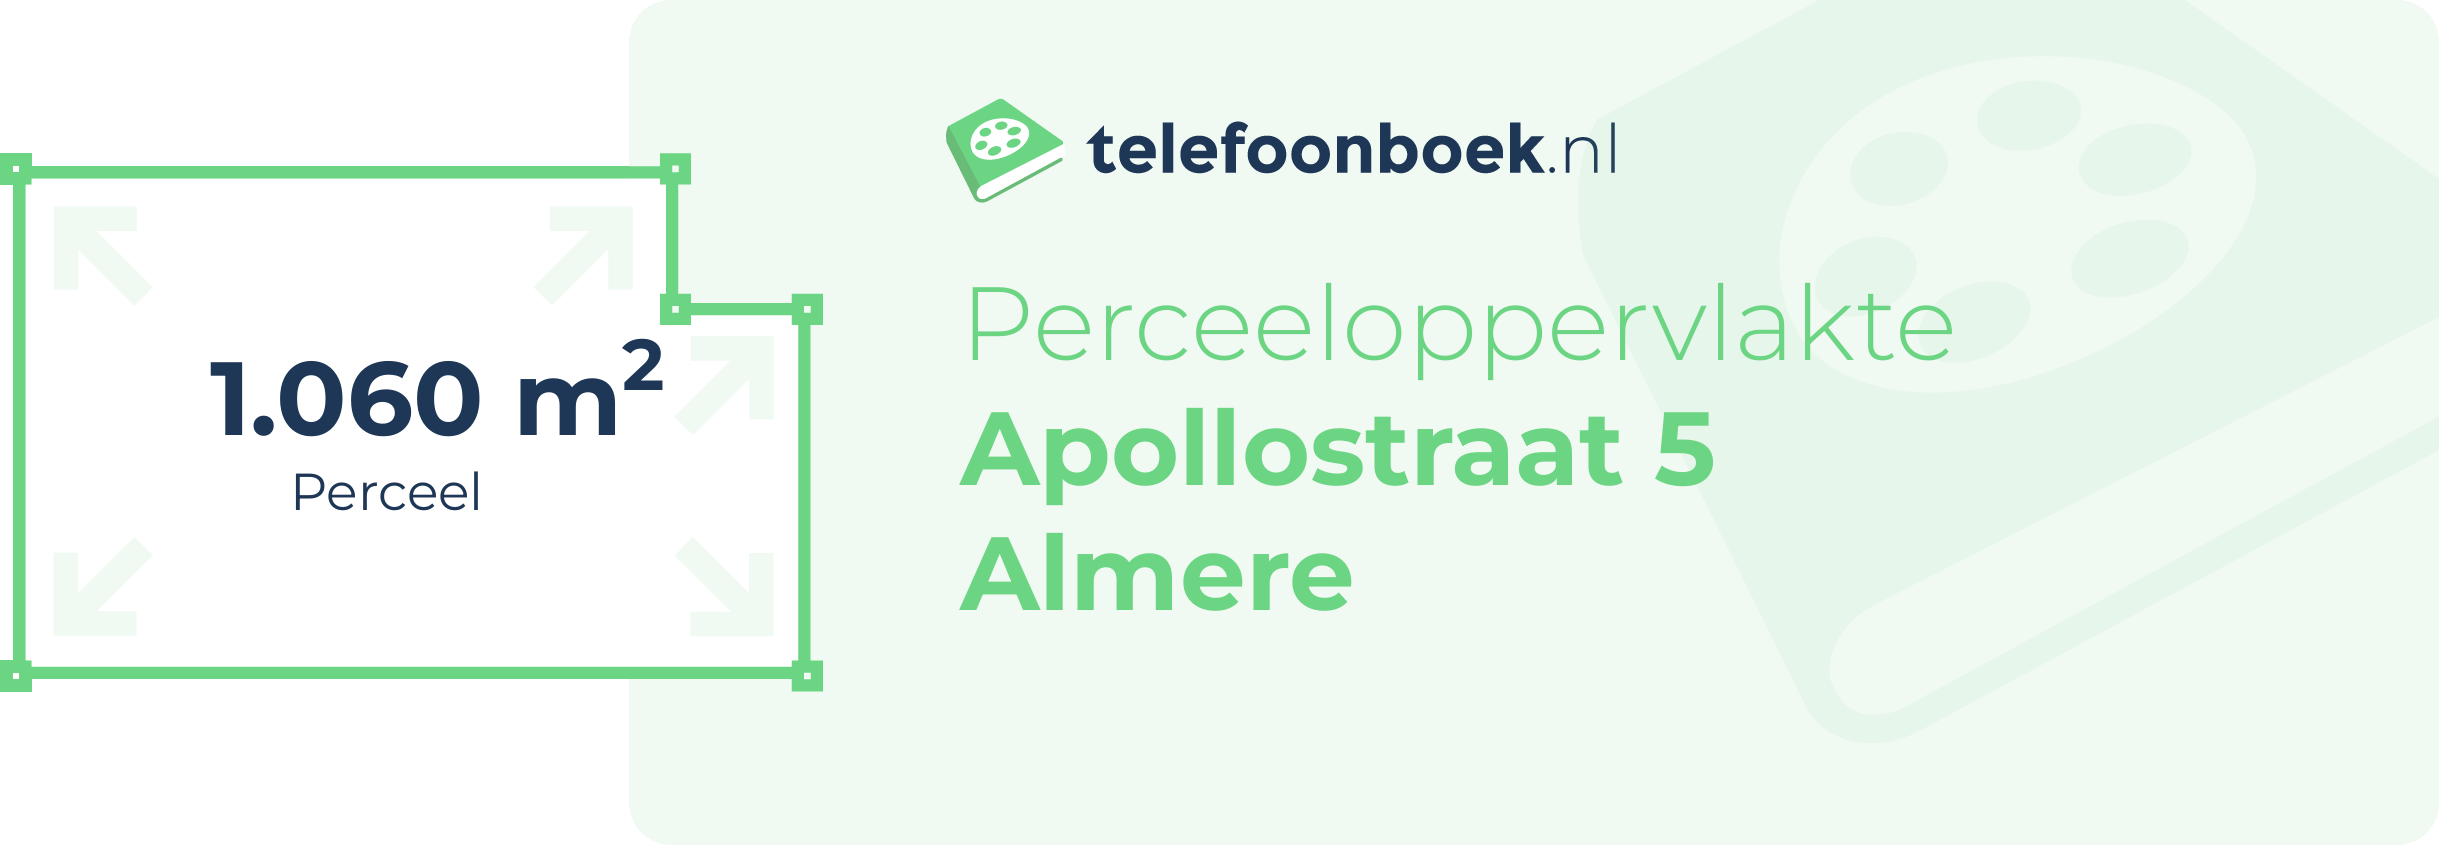 Perceeloppervlakte Apollostraat 5 Almere